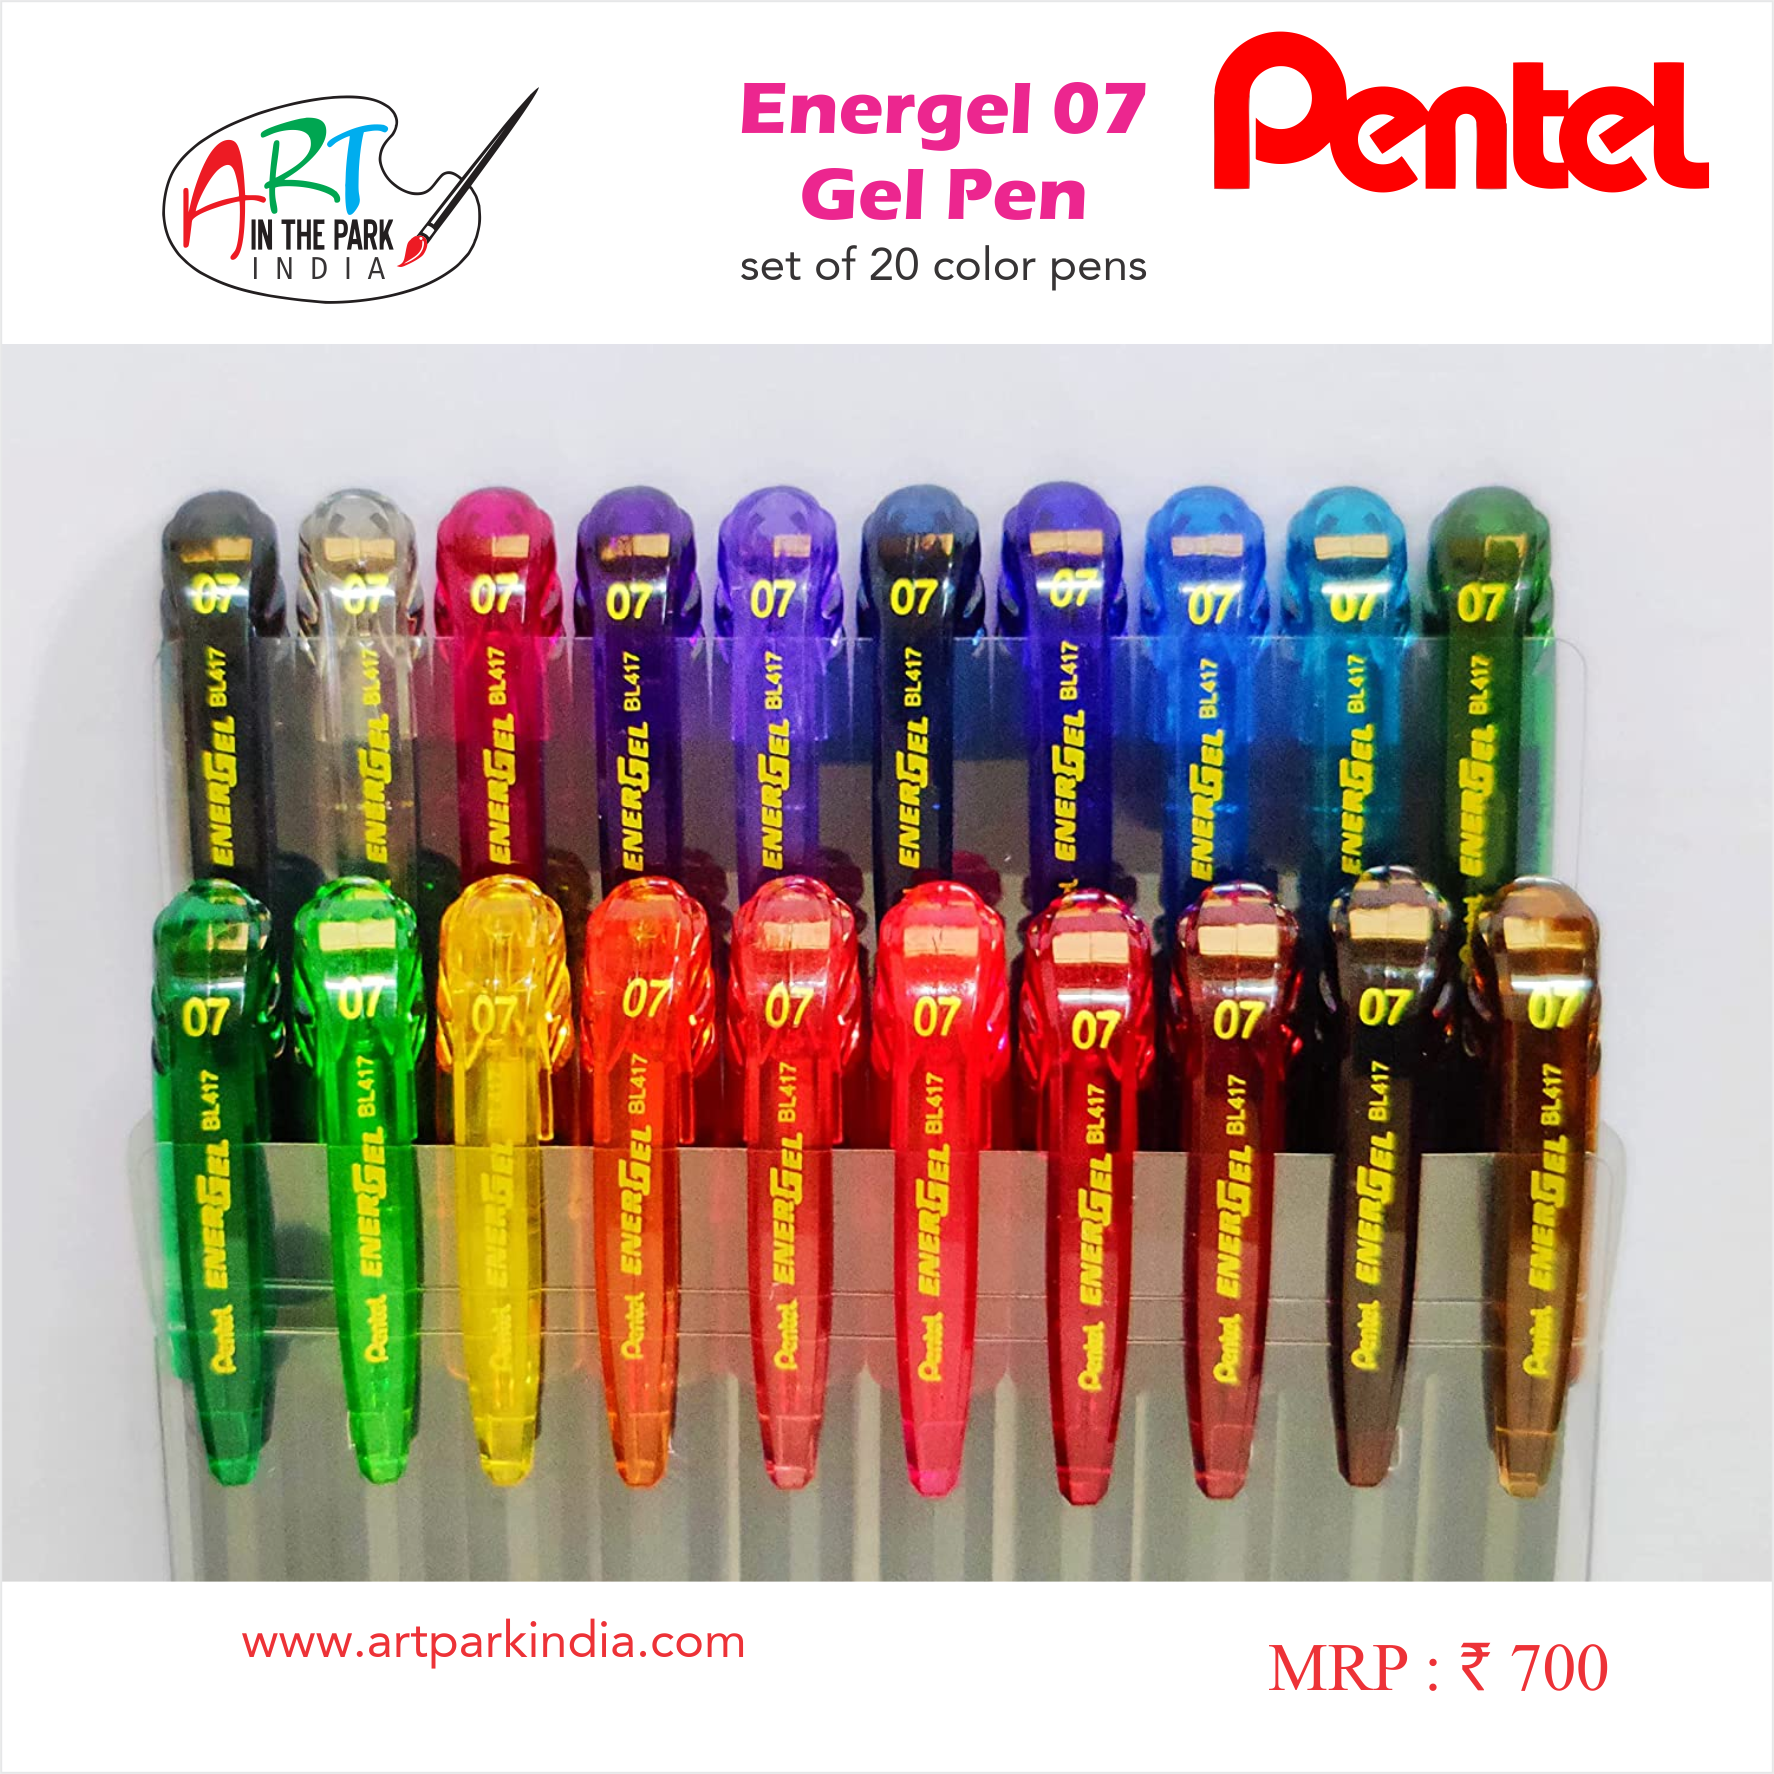 Pentel Energel Gel Pen 07 (set of 20 color pens) – Artparkindia